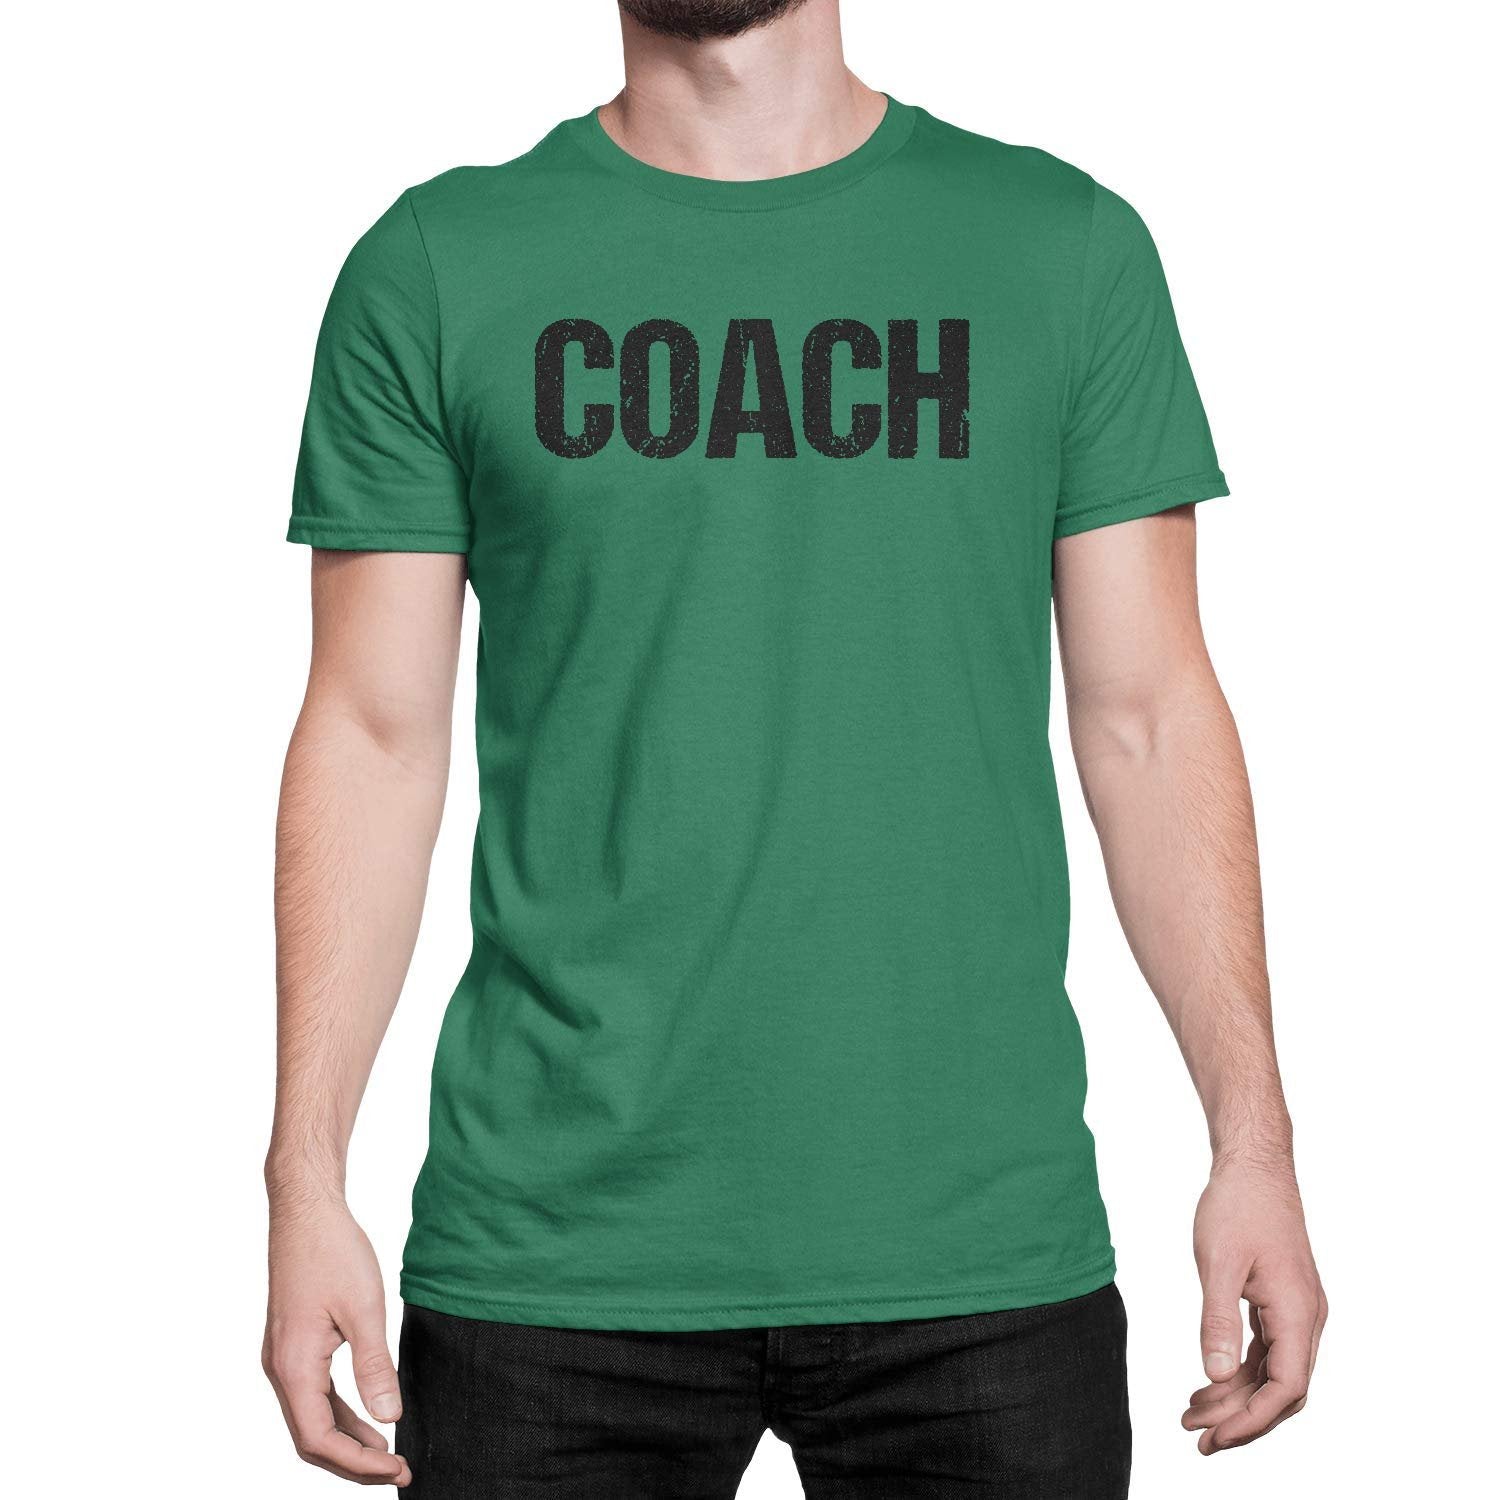 Coach T-Shirt Sports Coaching Tee Shirt (Green & Black, Distressed)